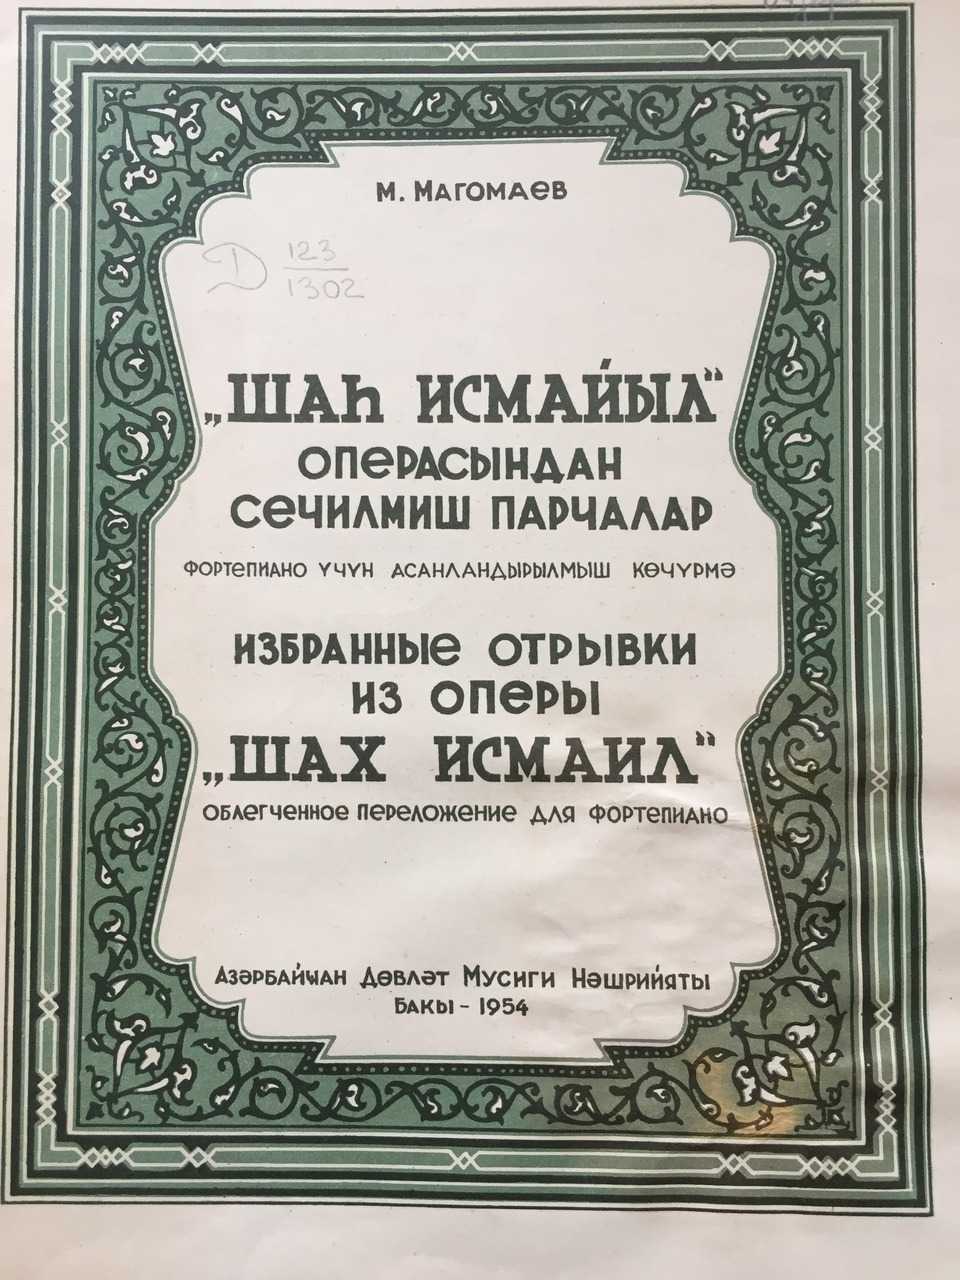 Аракишвили композитор биография и творчество